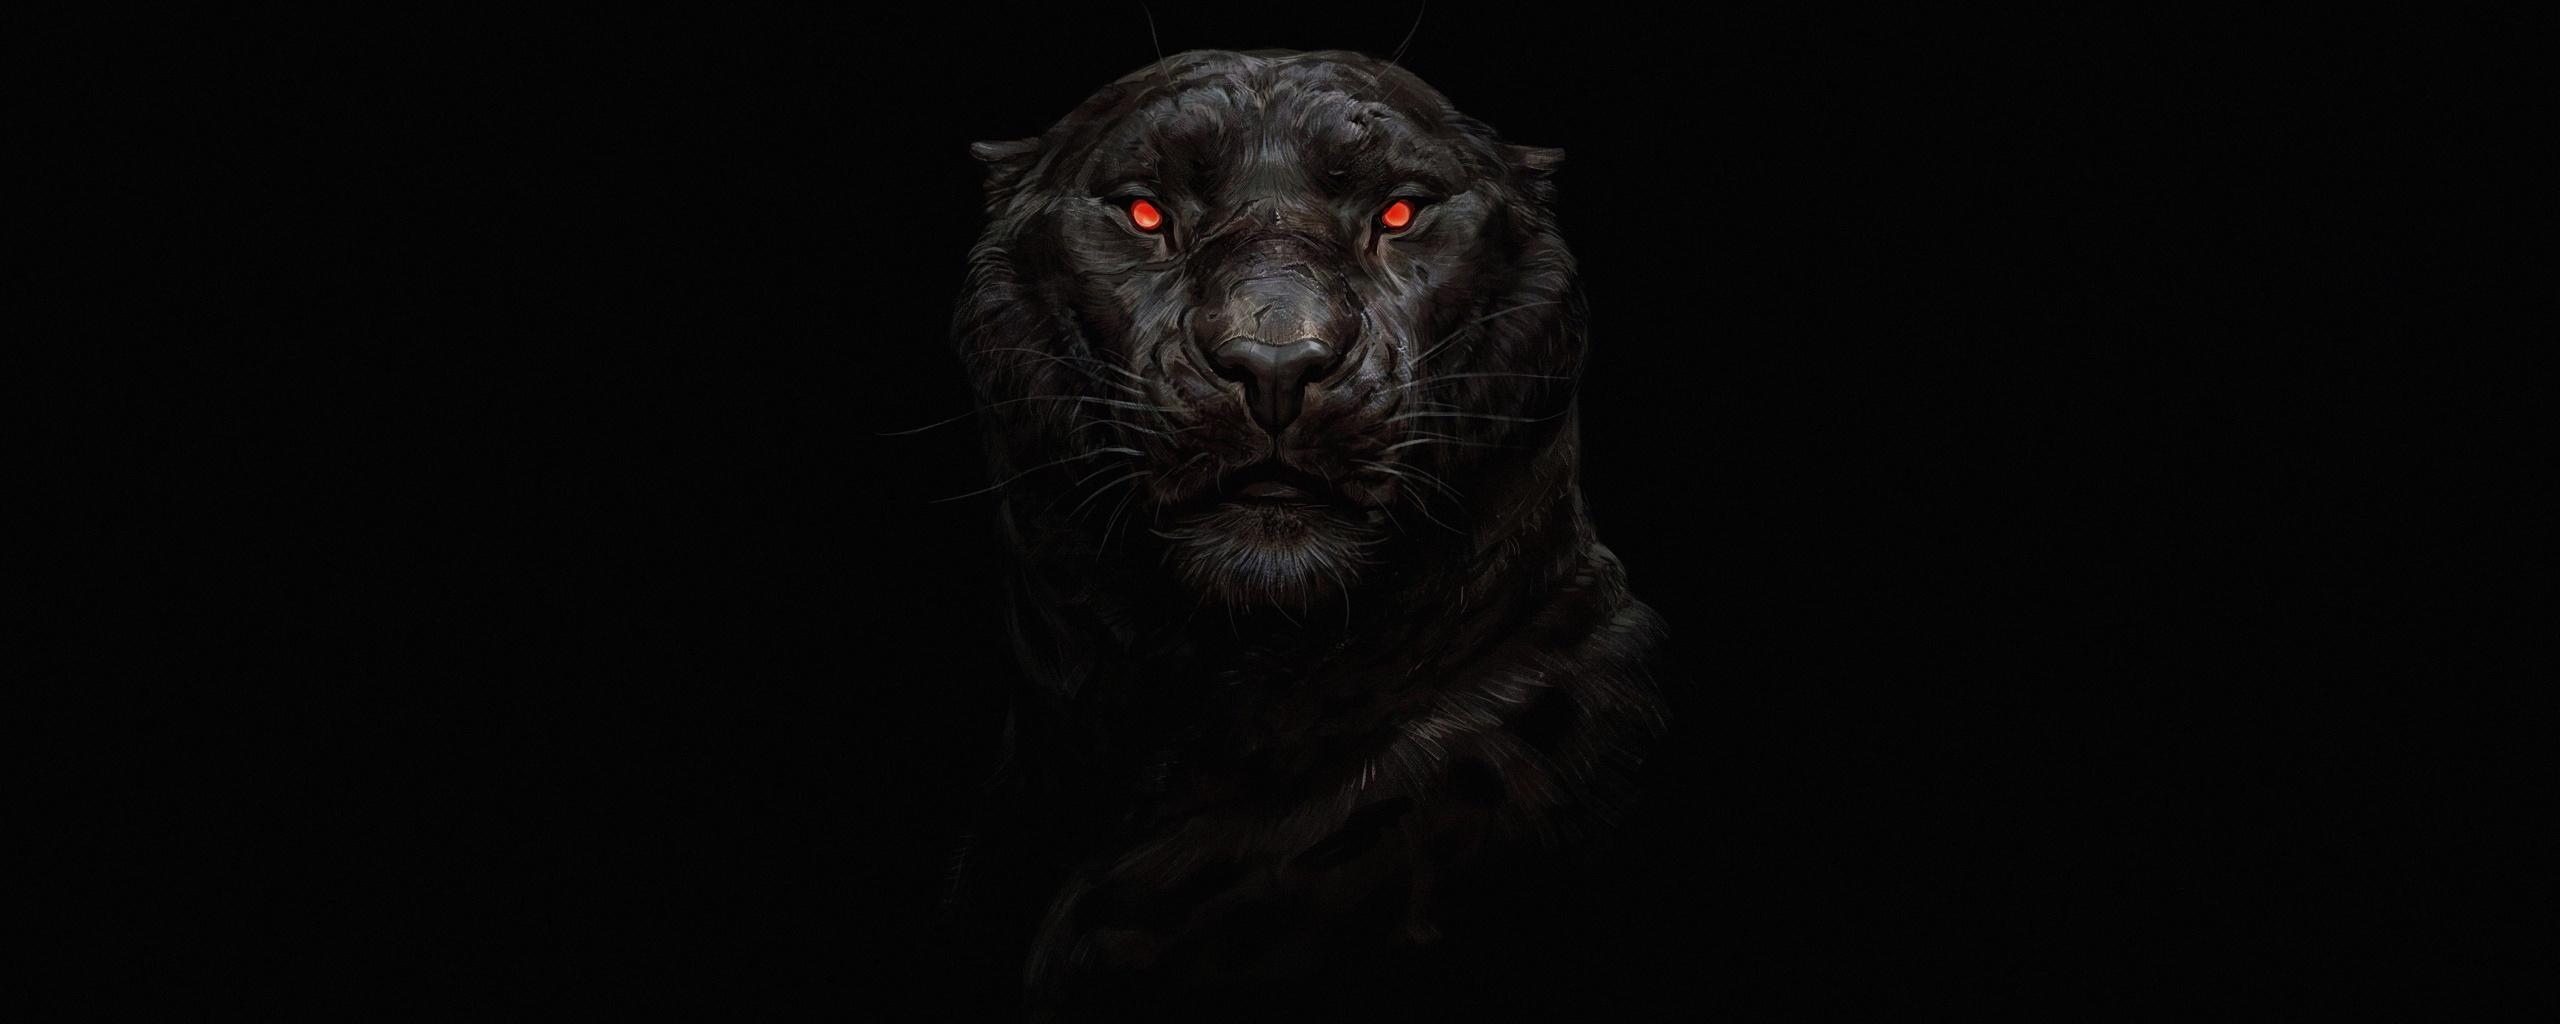 Download Tiger, glowing red eyes, predator, dark wallpaper, 2560x Dual Wide, Wide 21: Widescreen